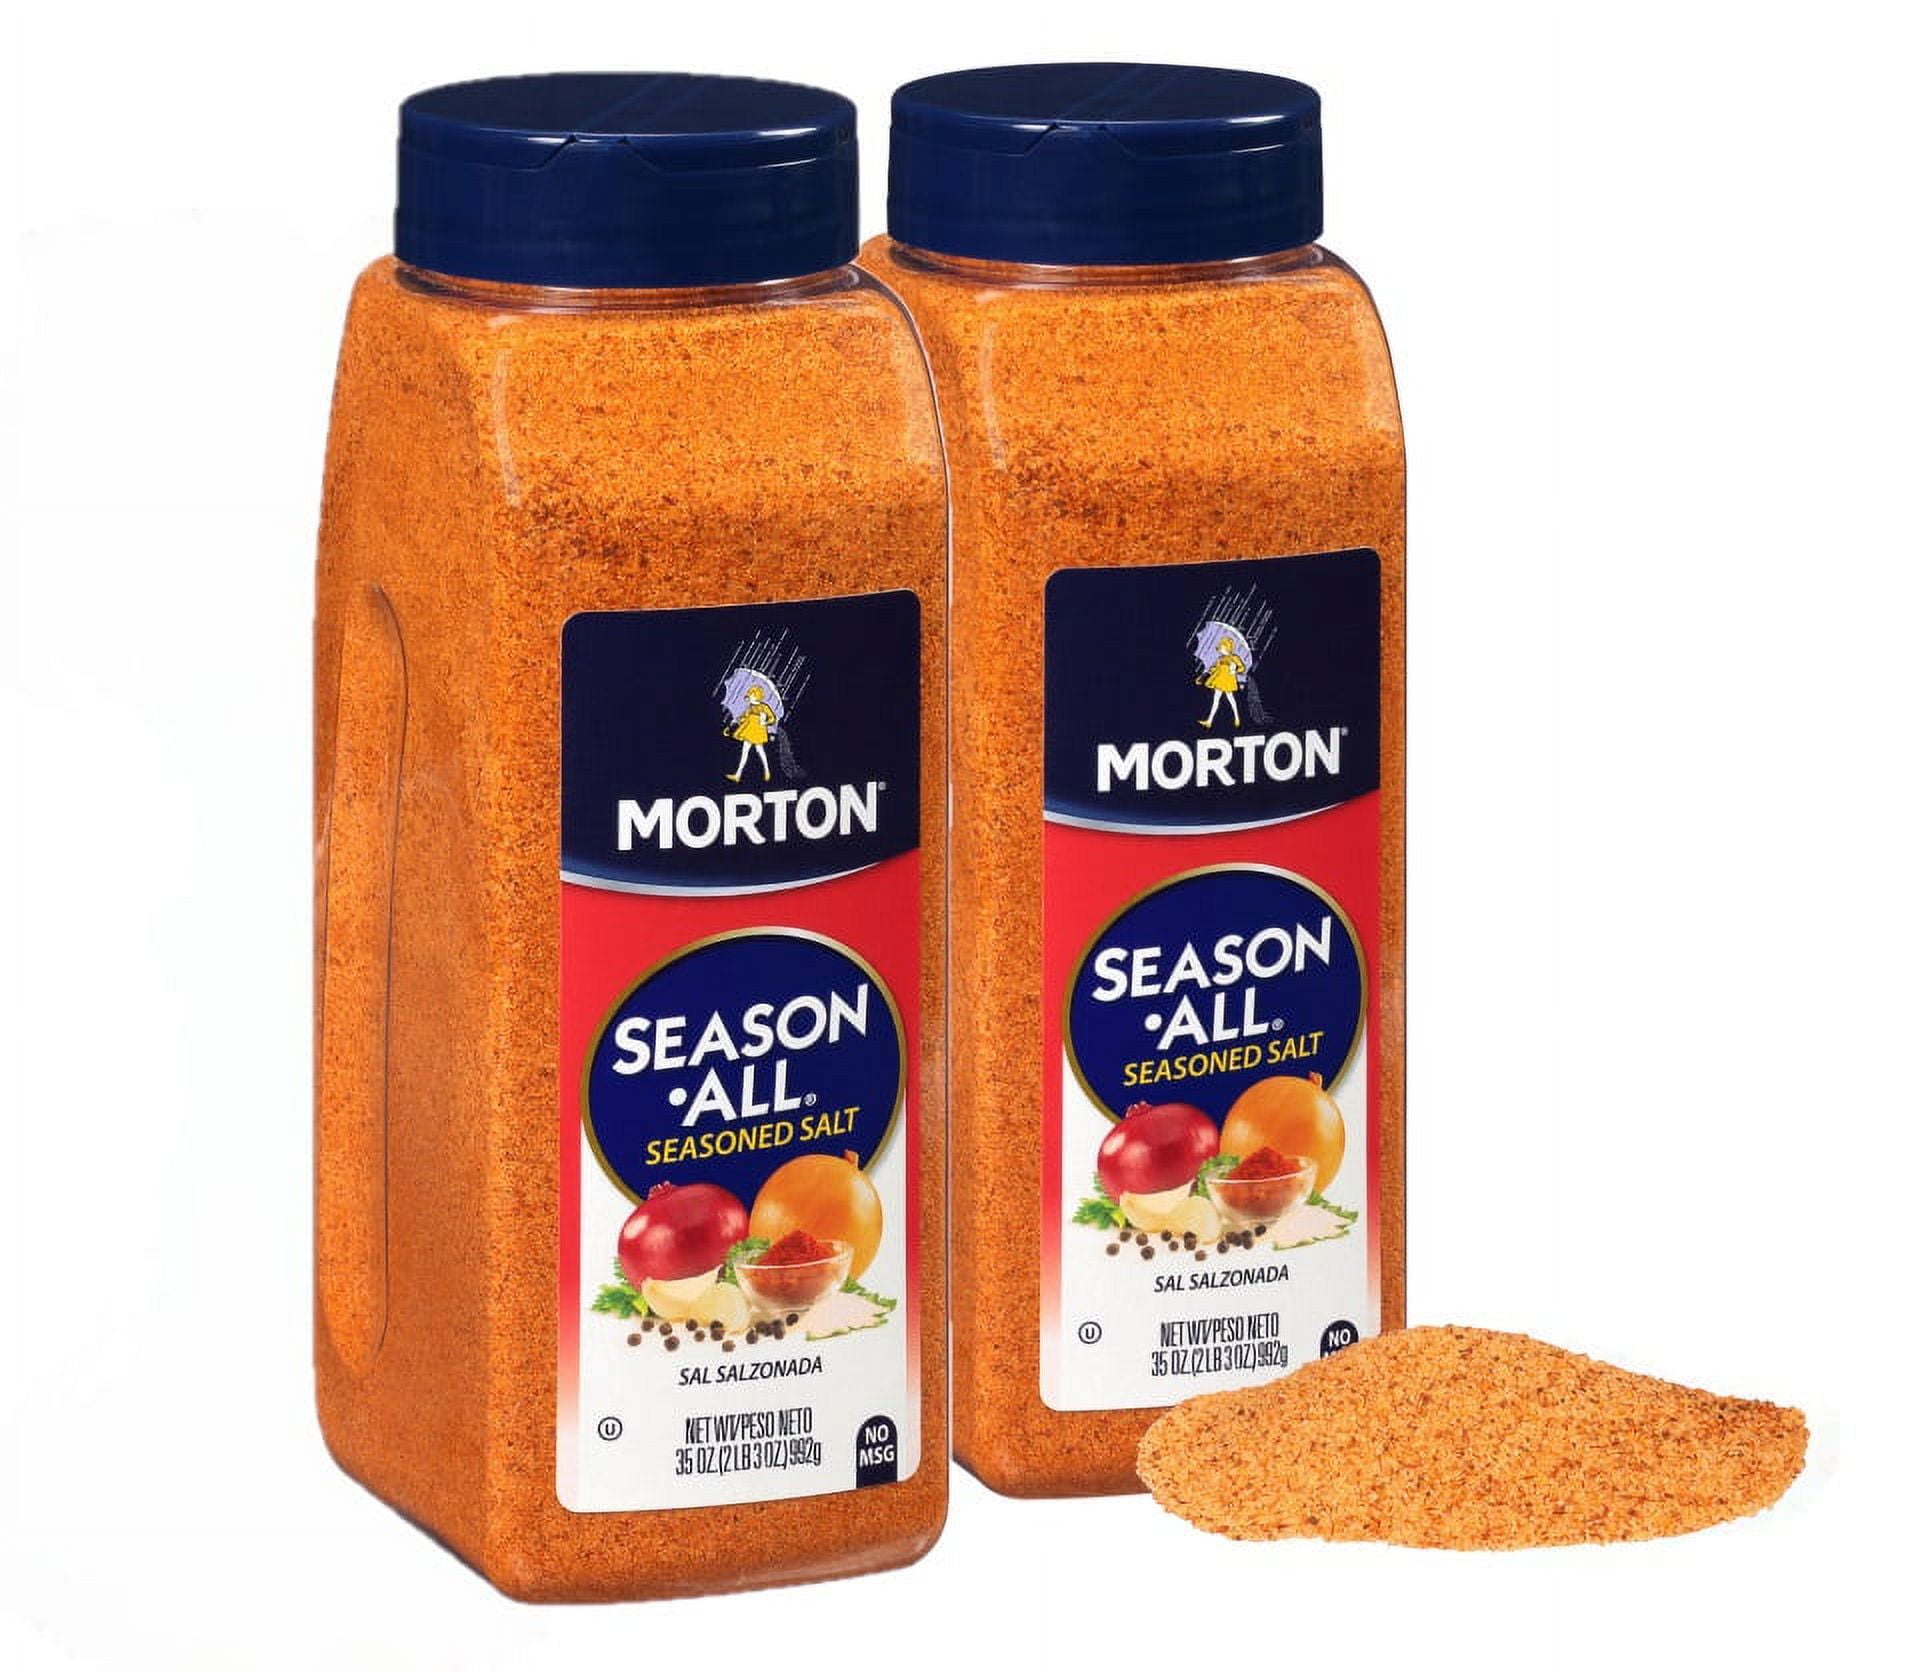 Product of Morton Season-All Seasoned Salt Ounce 35 Ounce (Pack of 2)